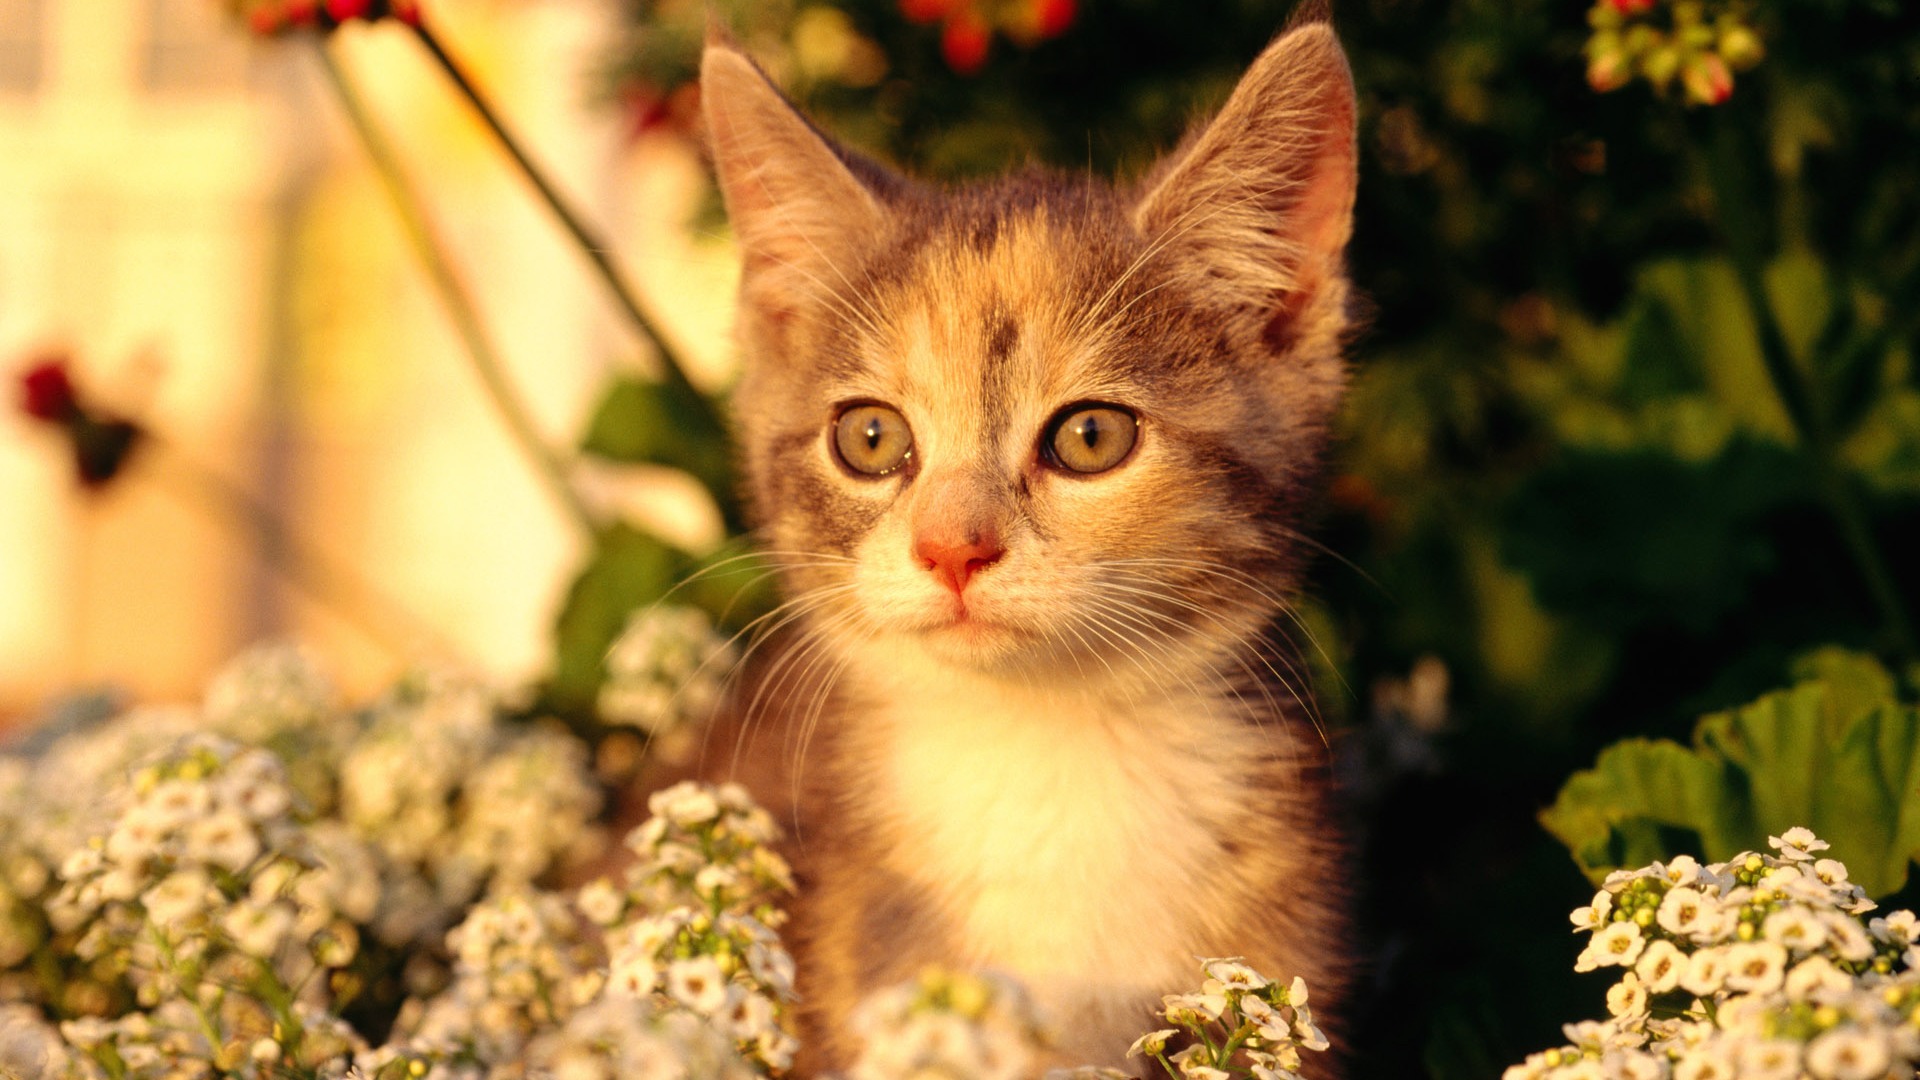 HD wallpaper cute cat photo #21 - 1920x1080